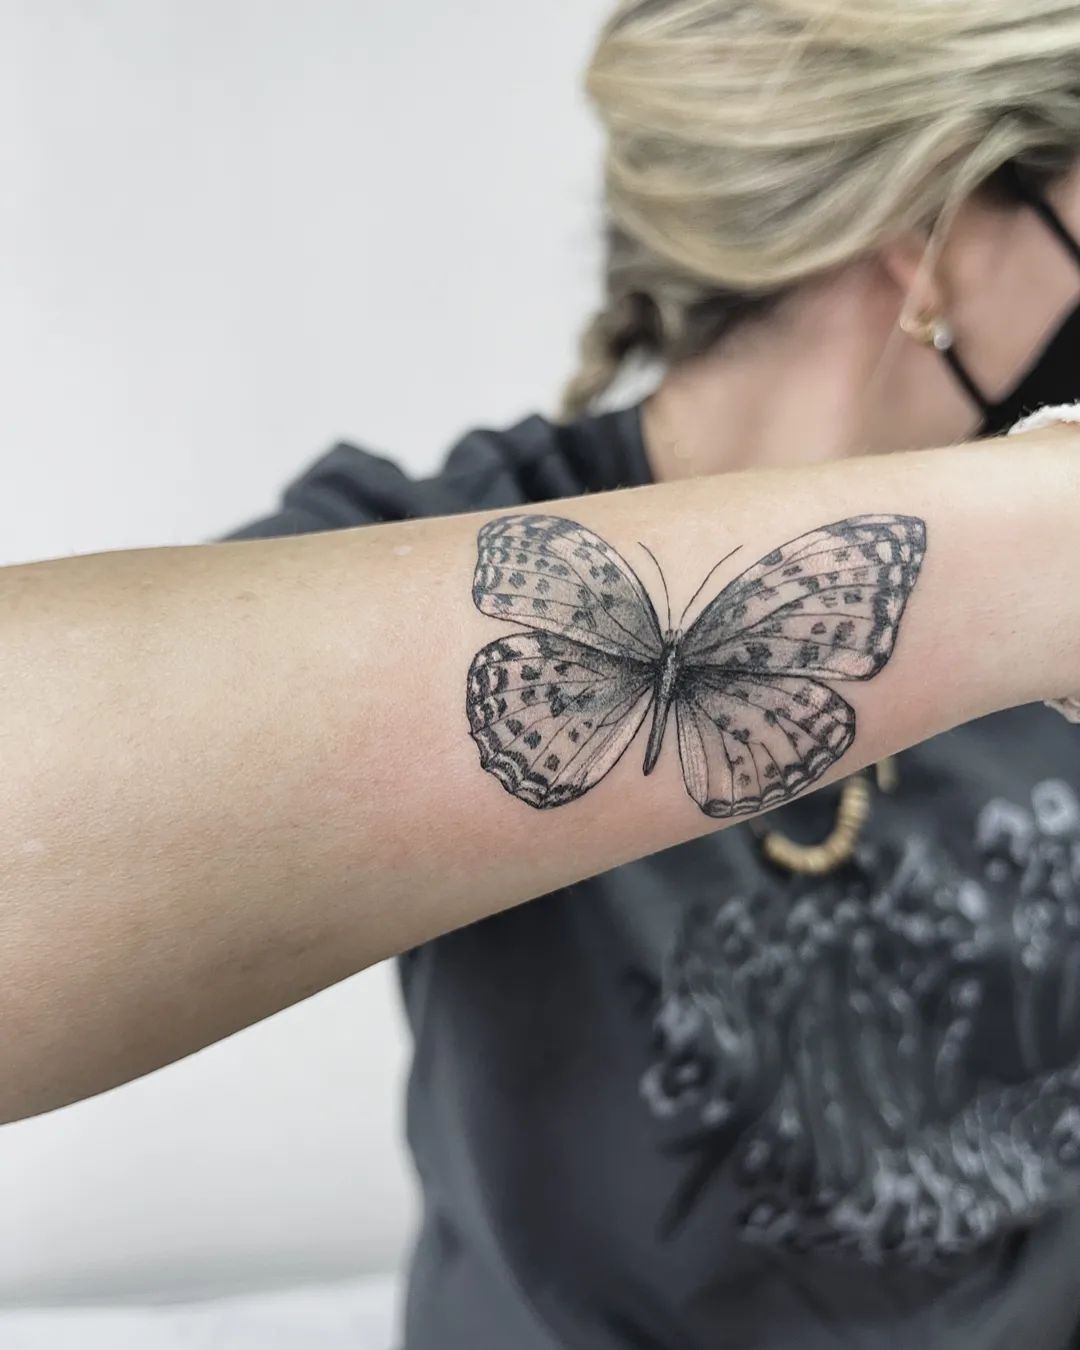 Tatuaje de mariposa en el antebrazo.